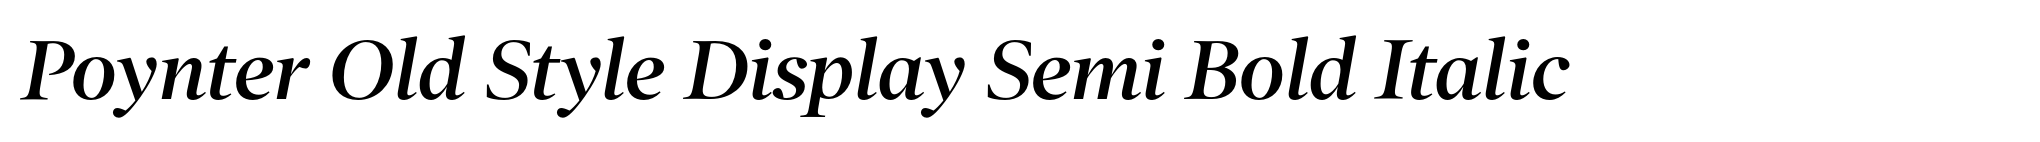 Poynter Old Style Display Semi Bold Italic image